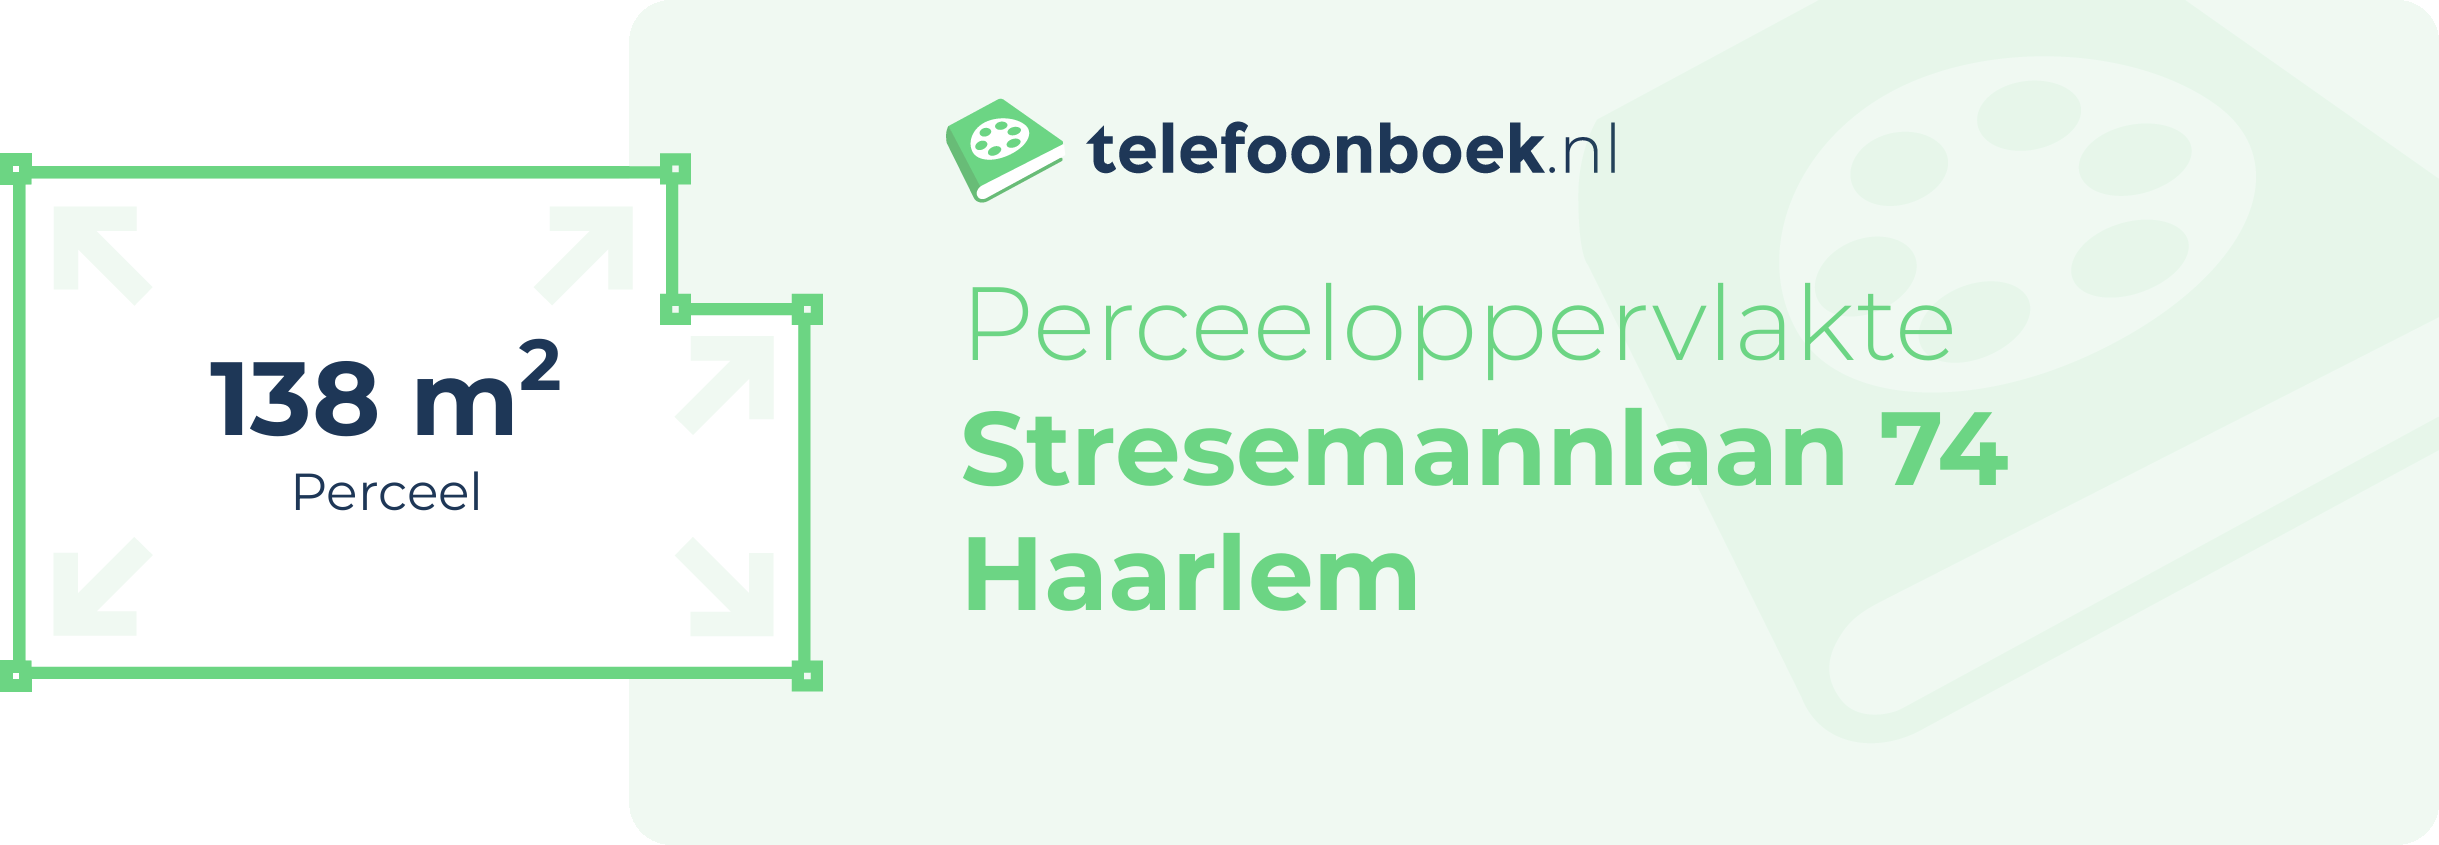 Perceeloppervlakte Stresemannlaan 74 Haarlem